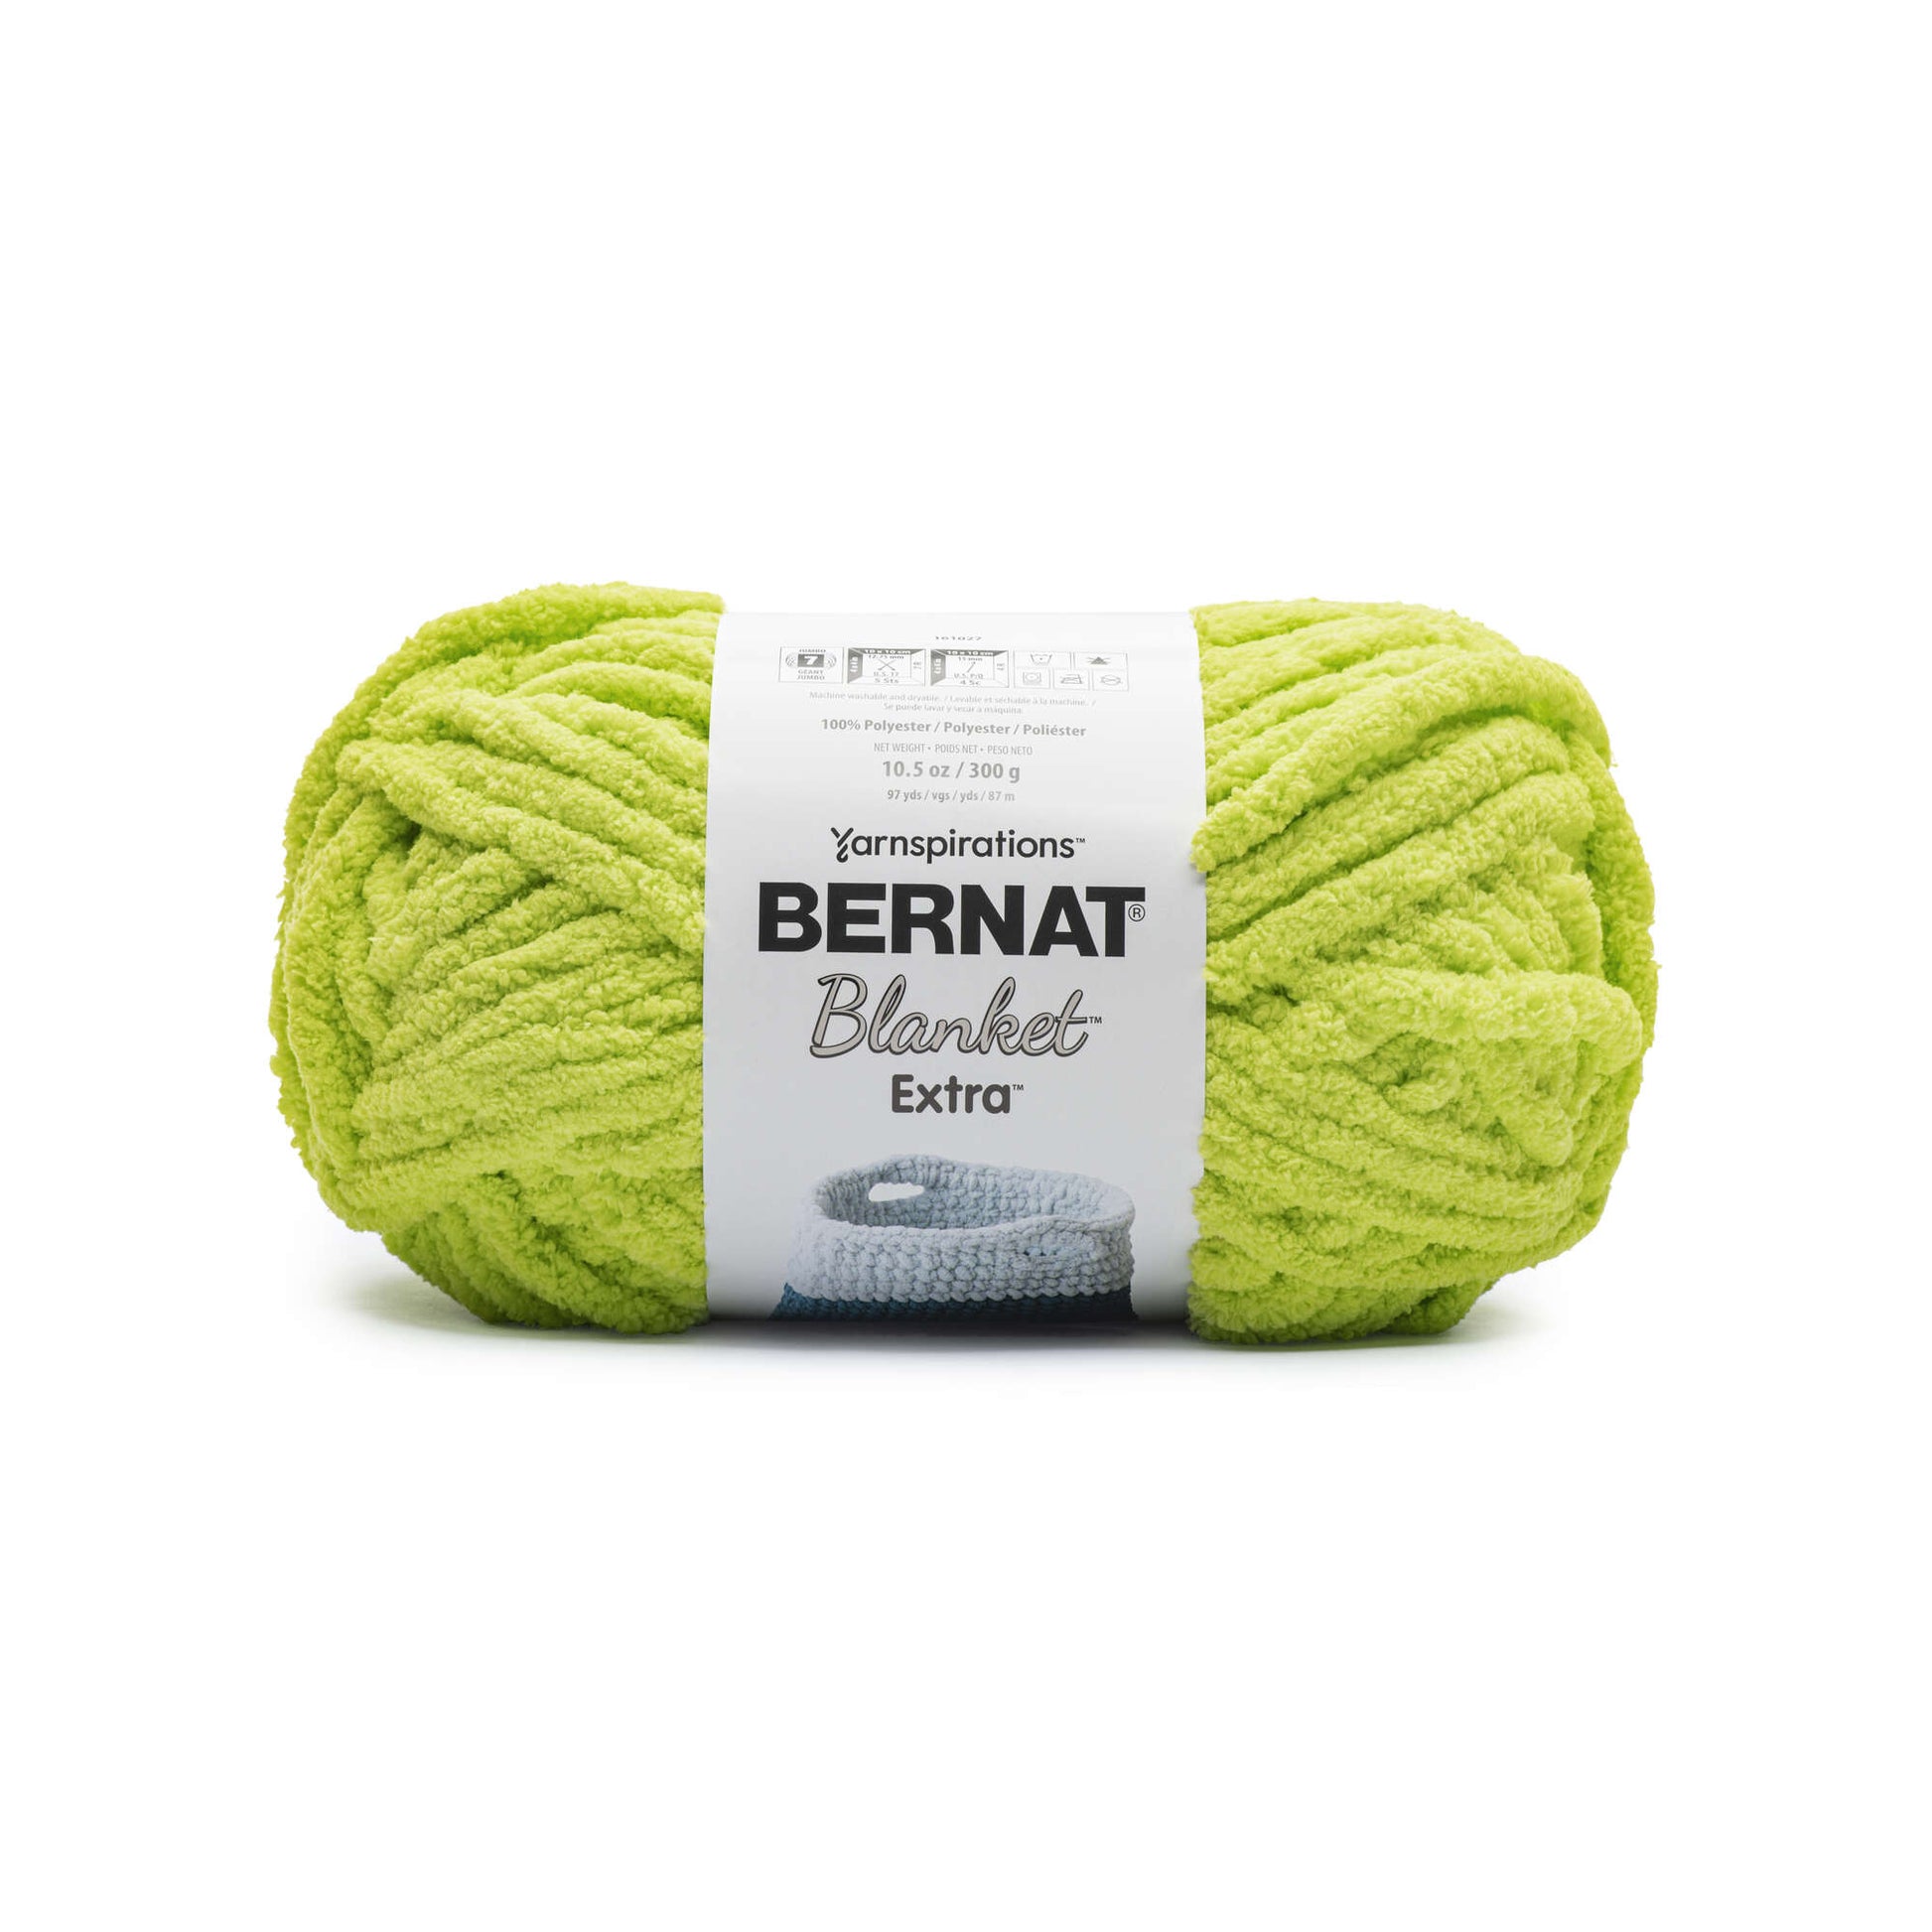 Bernat Blanket Extra Yarn (300g/10.5oz) Bright Lime